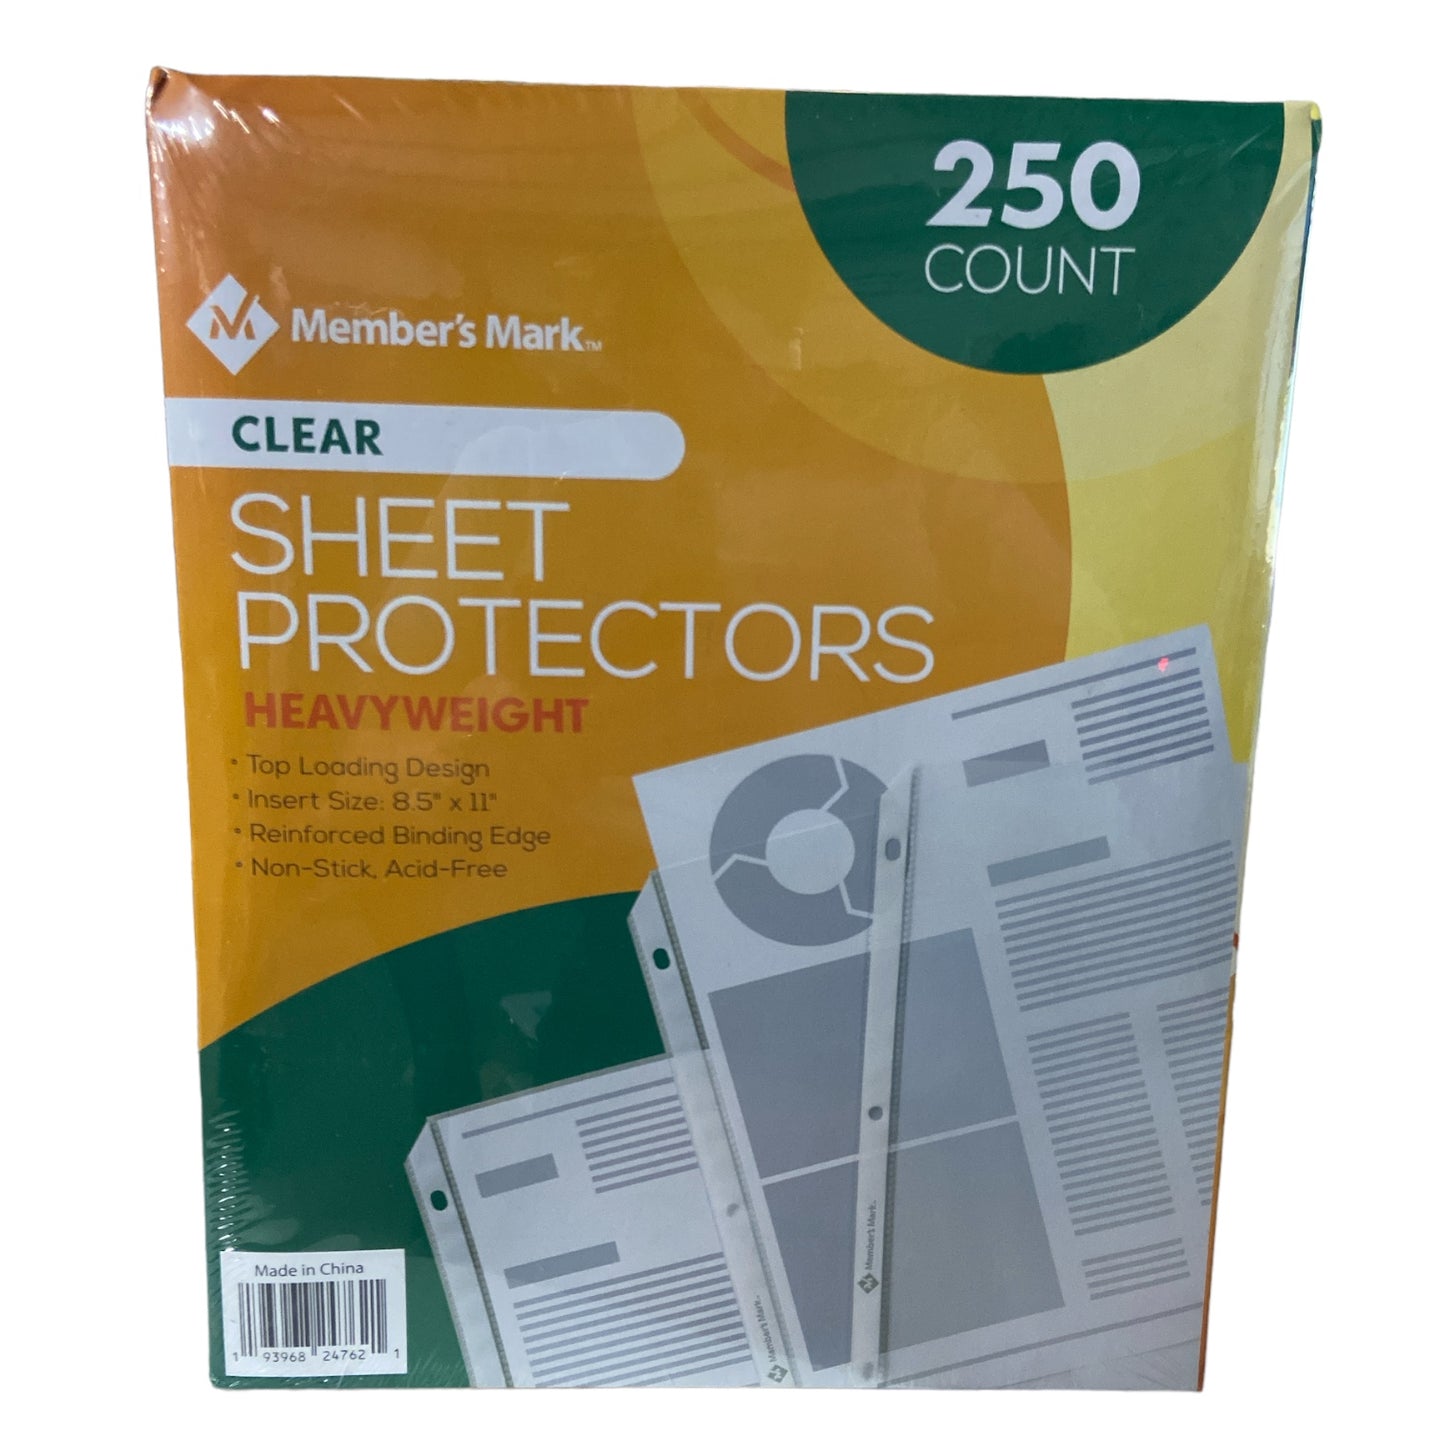 Member's Mark Heavyweight Sheet Protectors, Photo Protectors, 250ct